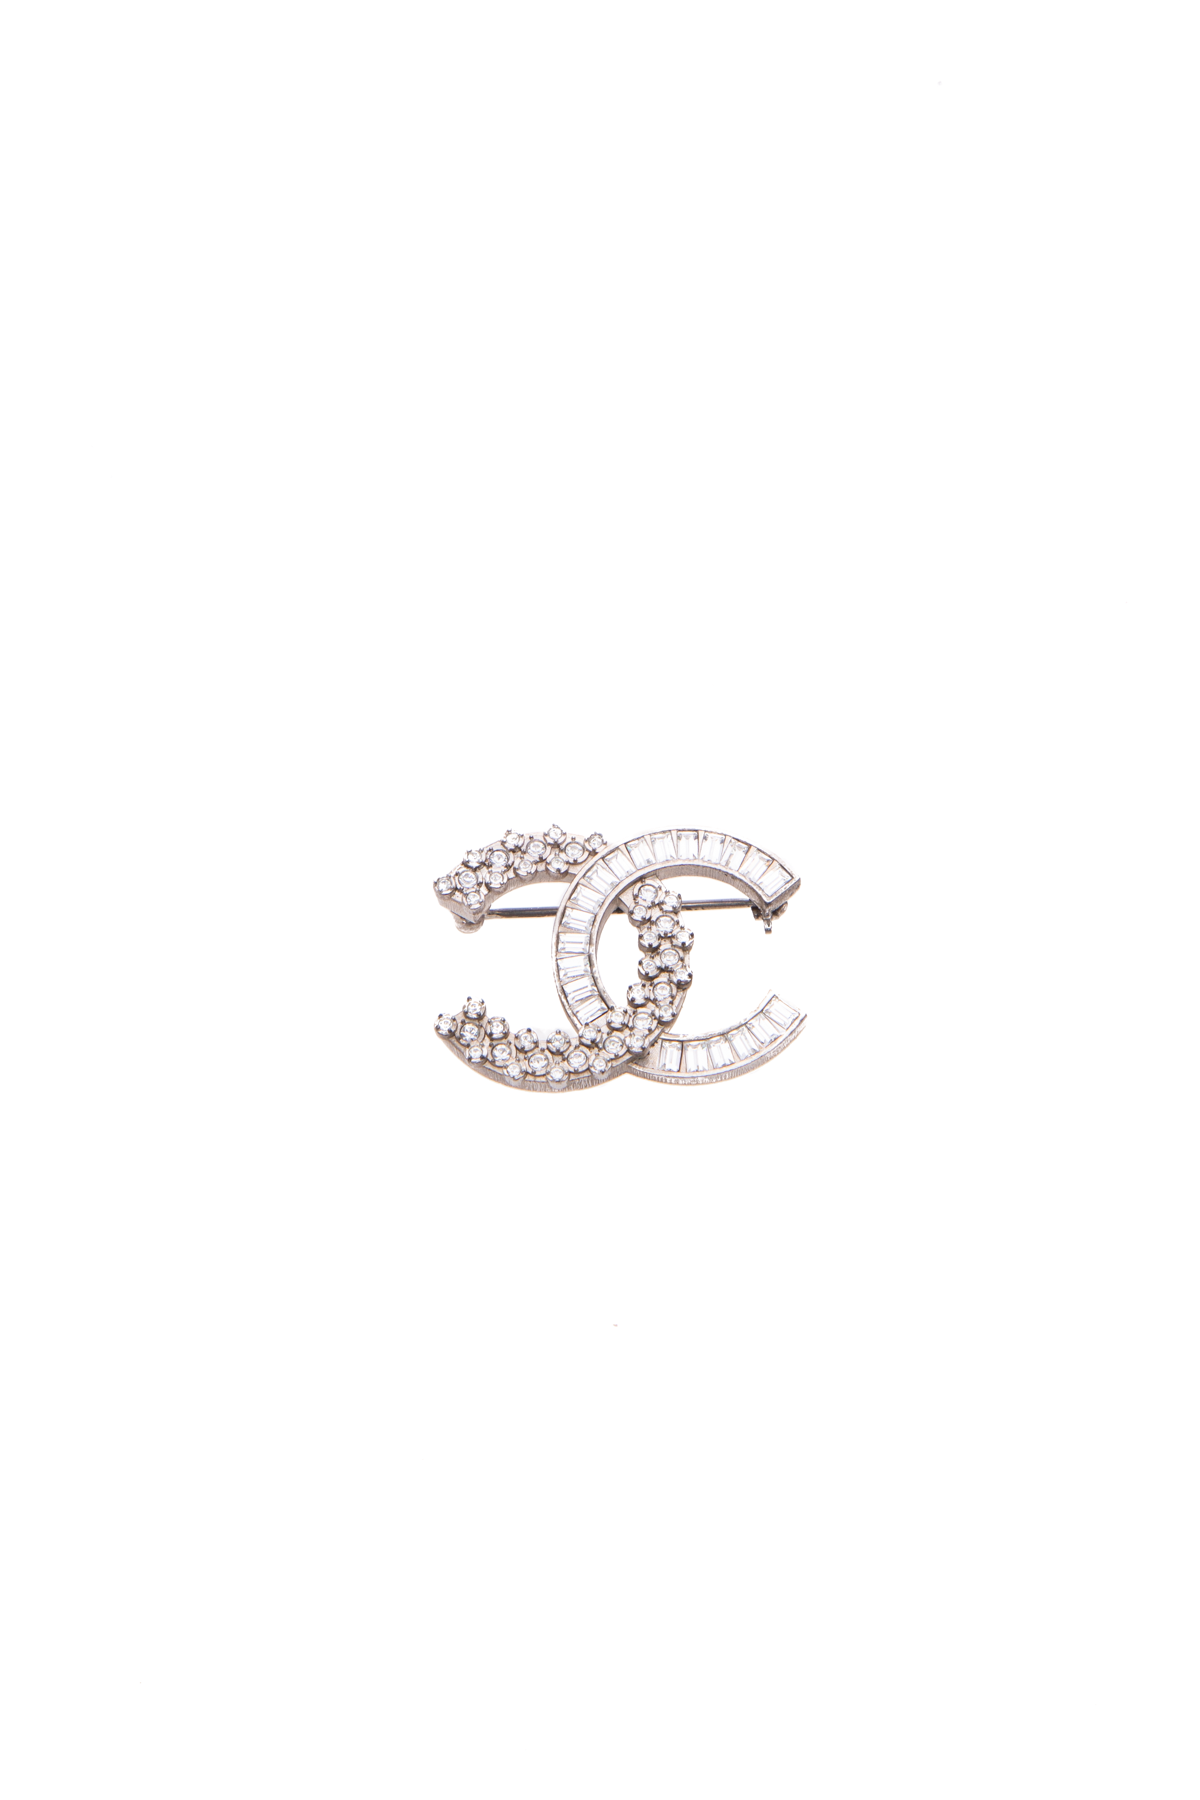 Pins & Brooches Chanel Chanel CC Brooch B 19 S